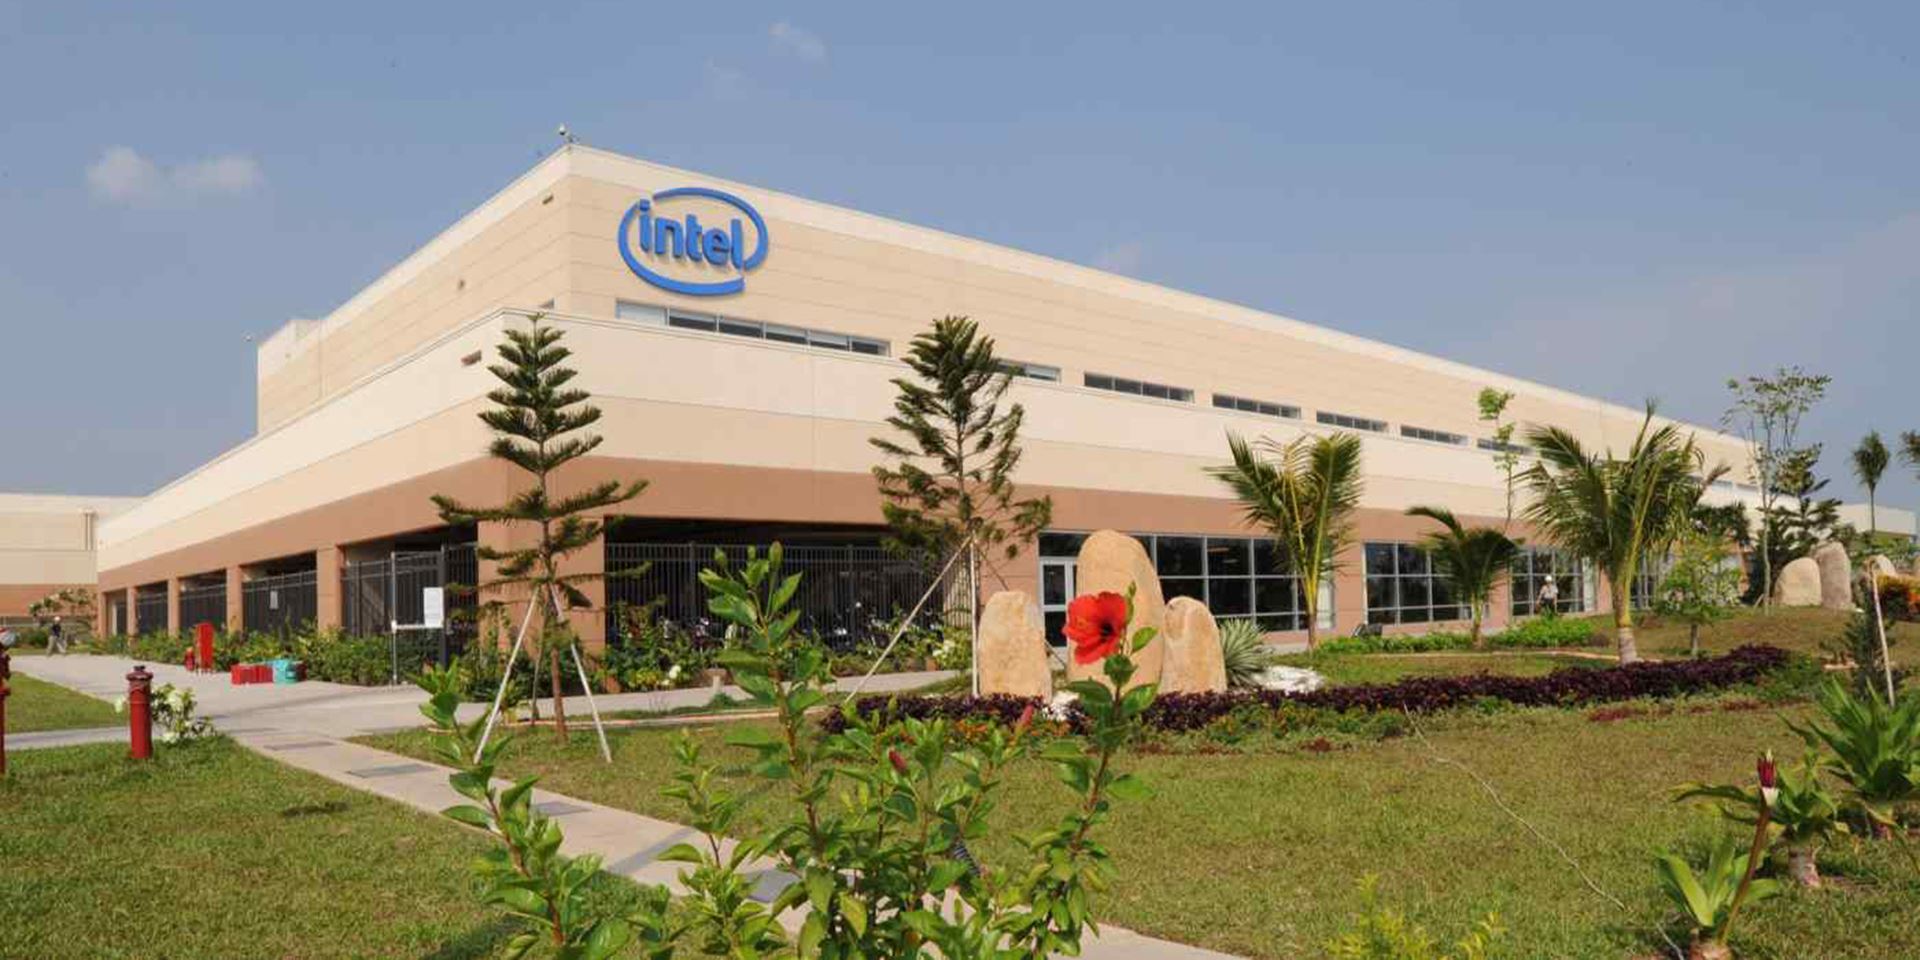 ESEC deploys “ETAP Power Engineering Service” project for Intel Vietnam customers